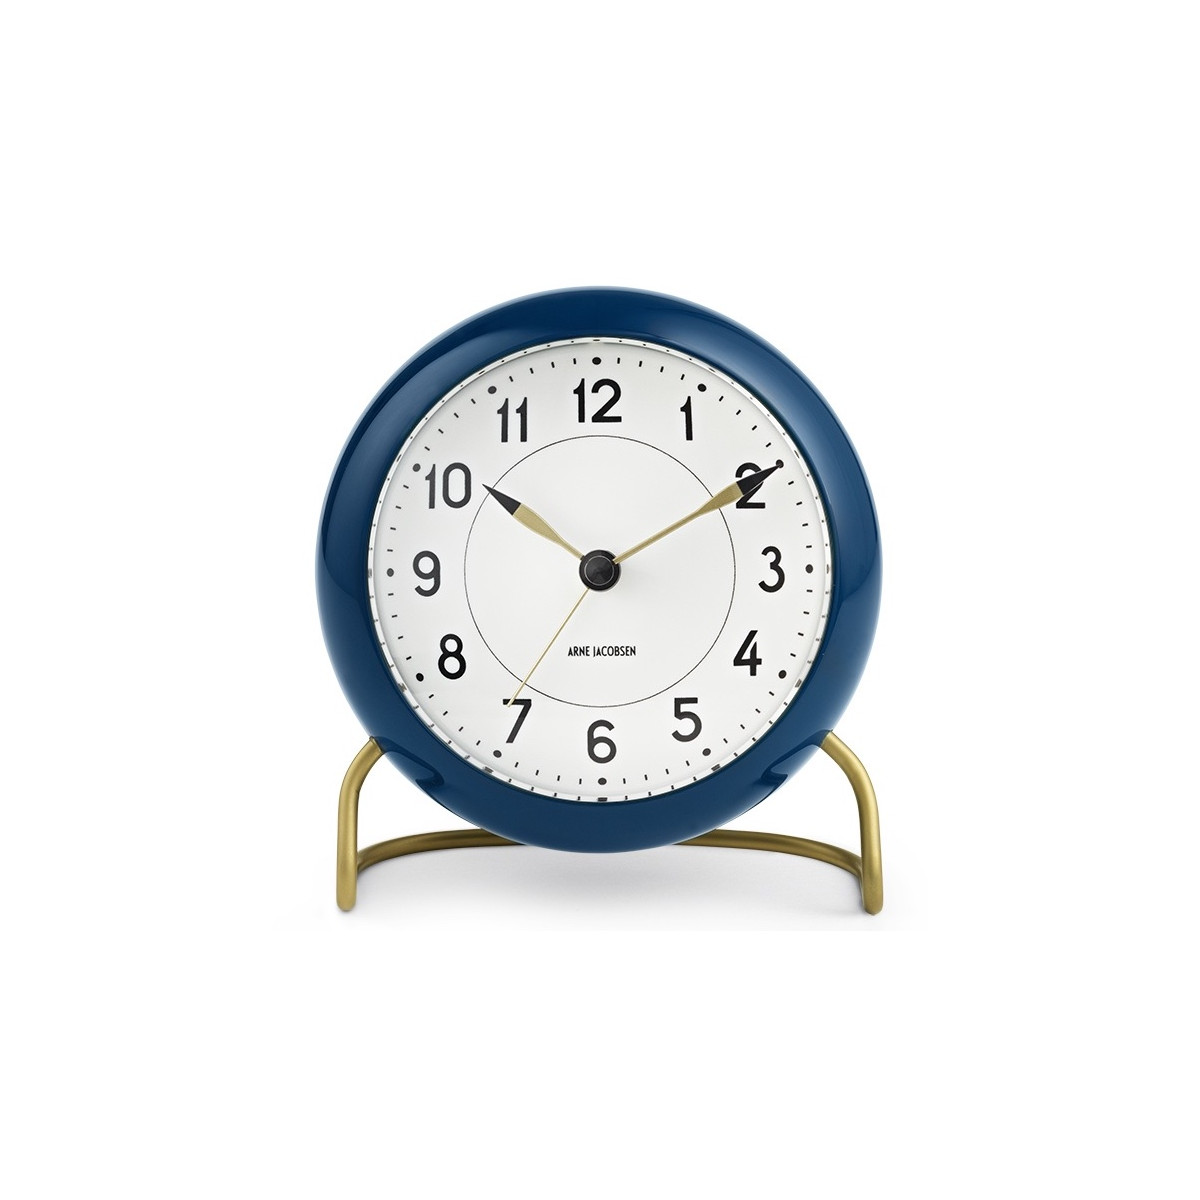 AJ Station alarm clock - navy teal blue - Arne Jacobsen